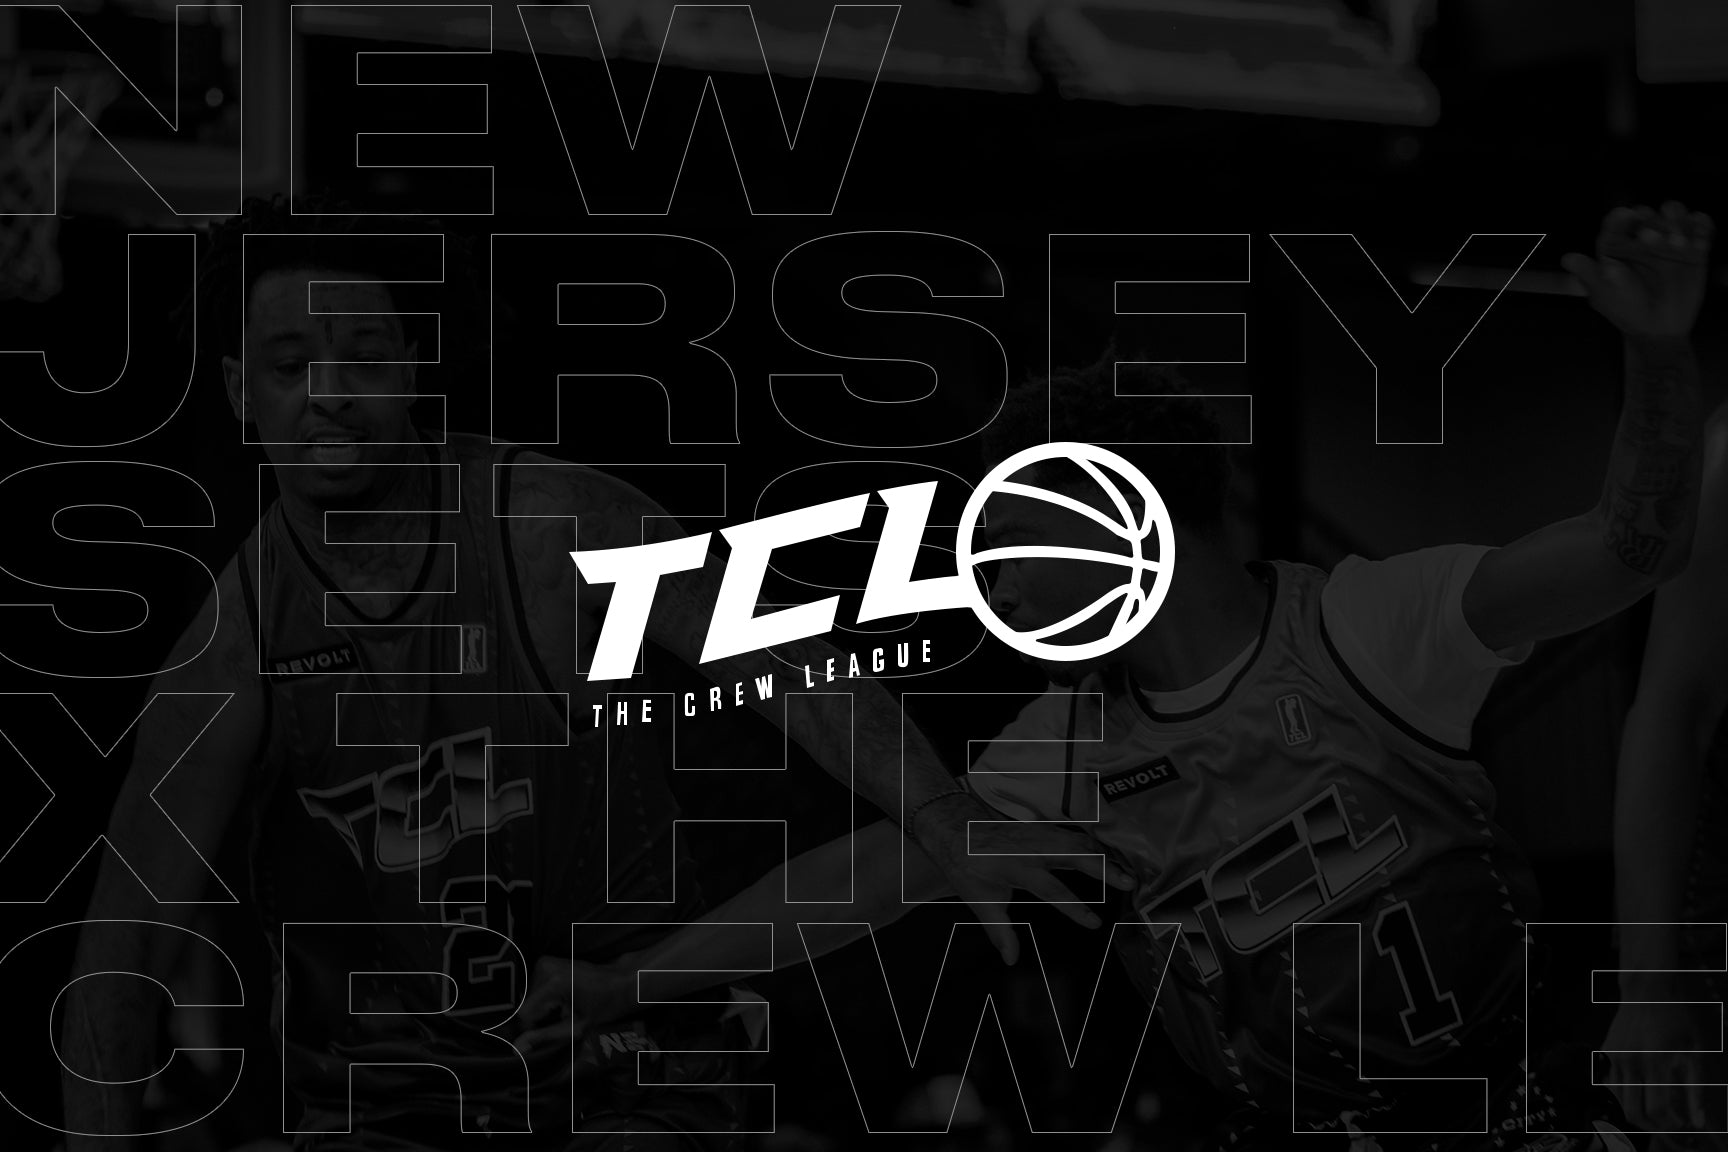 The Crew League (TCL)